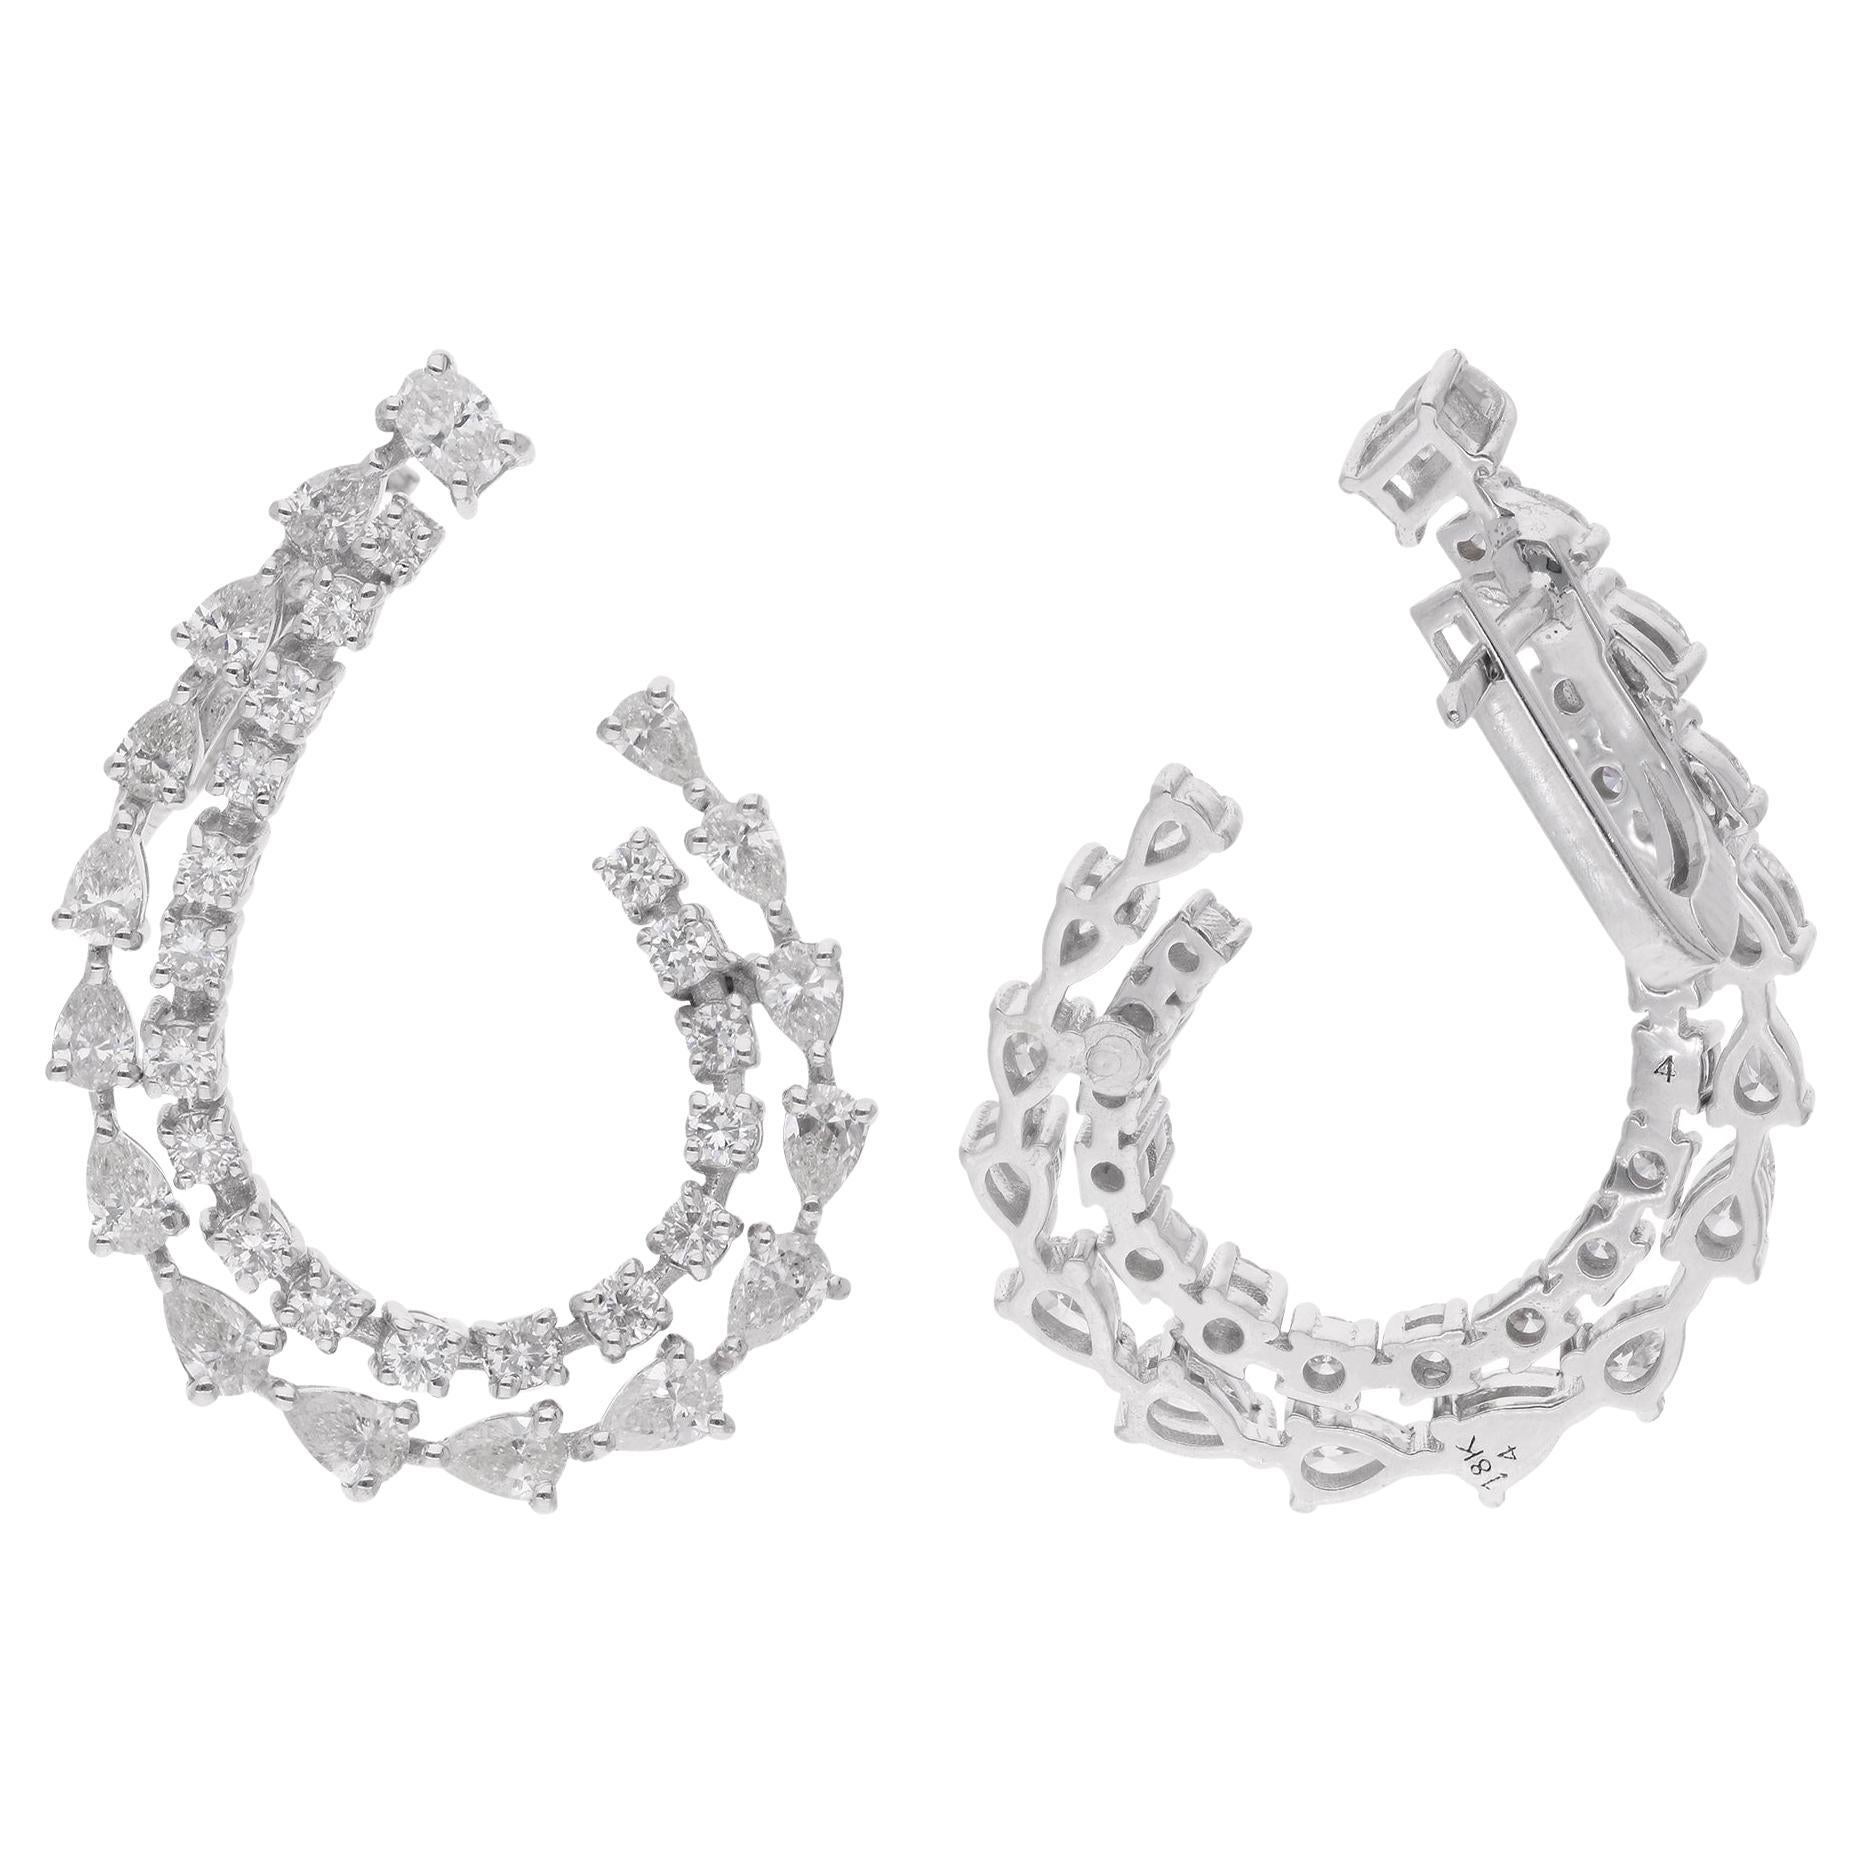 2.92 Carat Pear & Round Diamond Earrings 18 Karat White Gold Handmade Jewelry